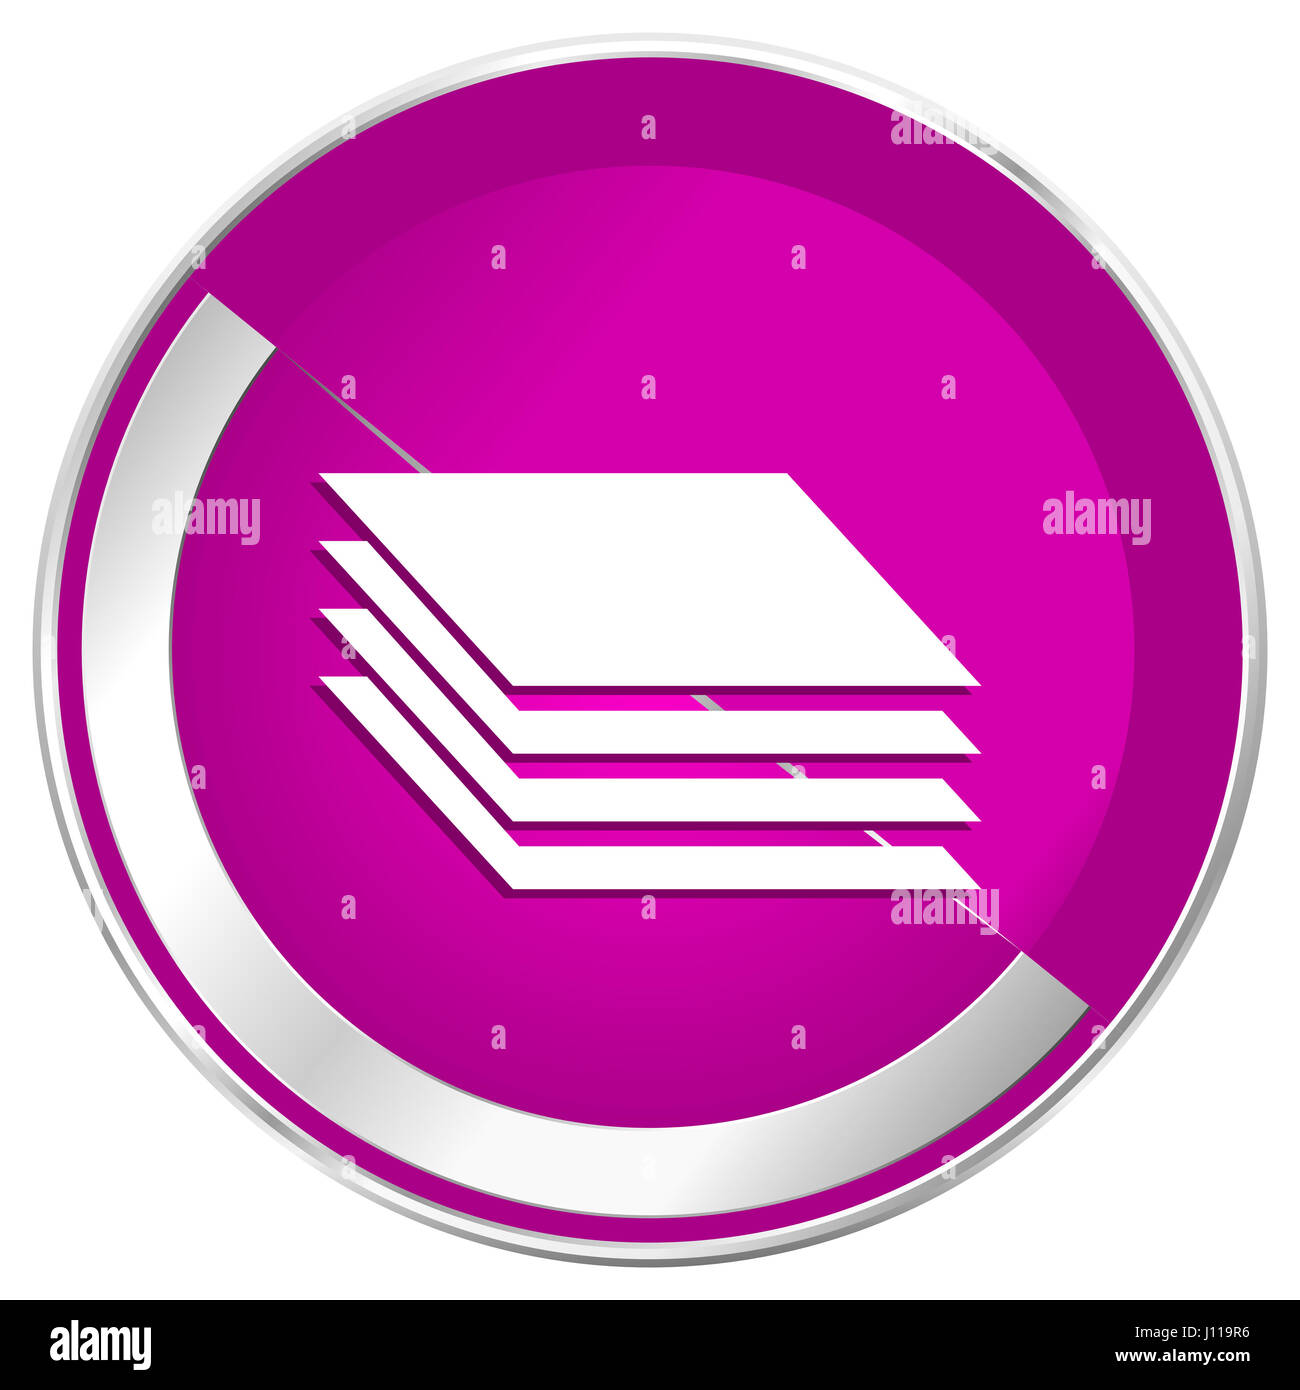 Layers web design violet silver metallic border internet icon. Stock Photo